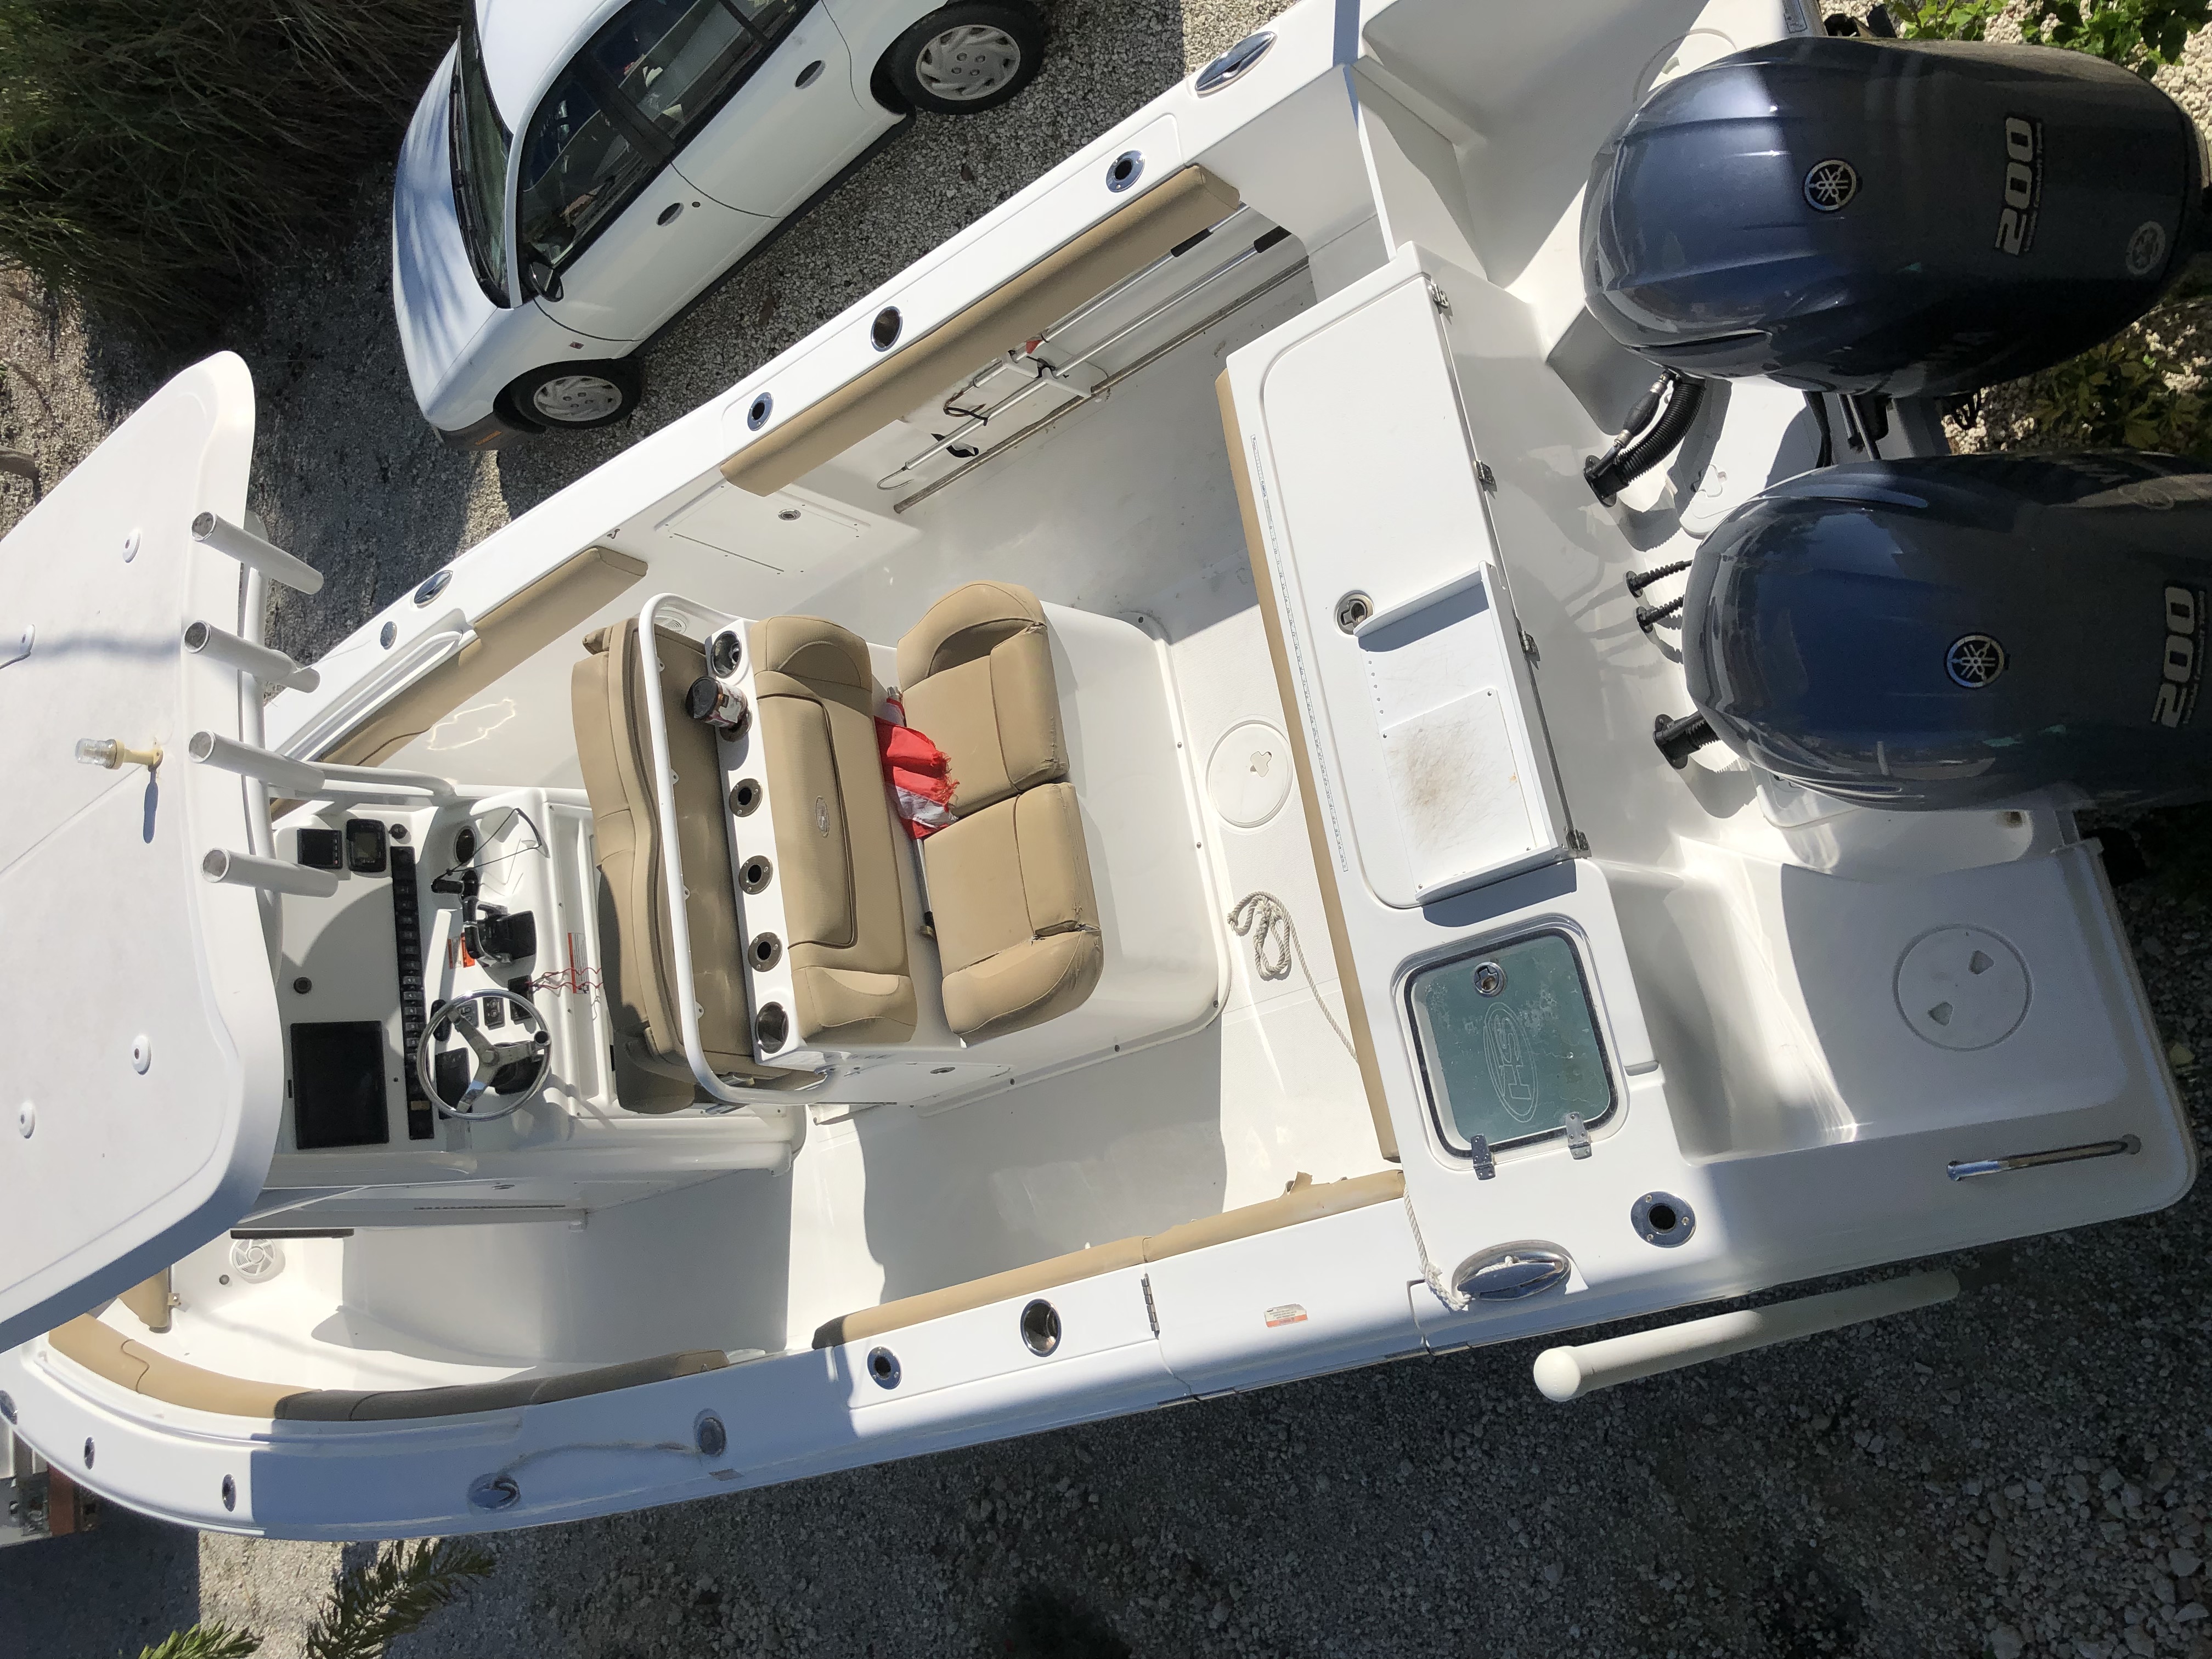 2016 Sea Hunt Gamefish 27CB Power boat for sale in Ramrod Key, FL - image 4 